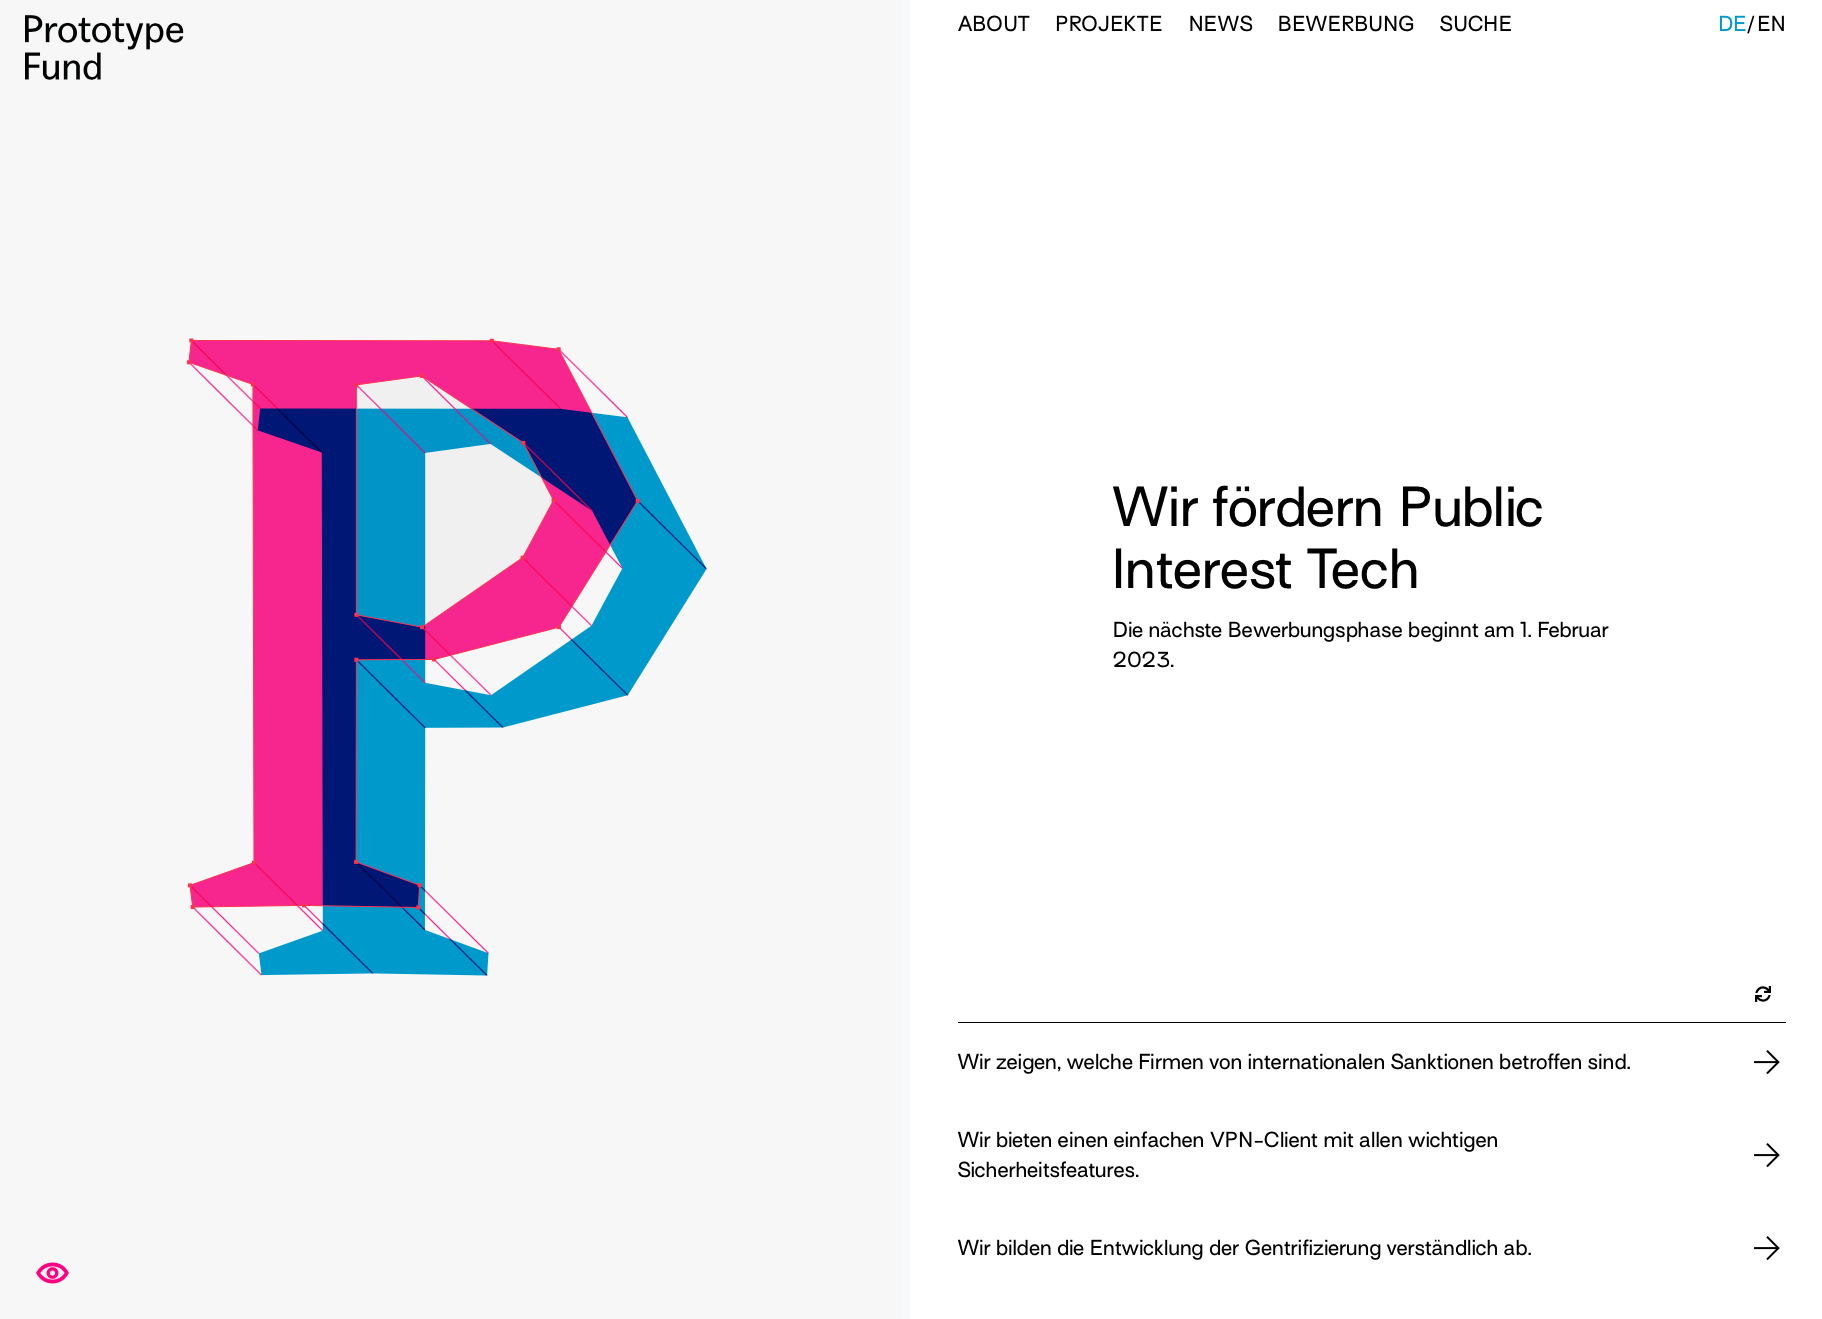 Image of Prototype Fund homepage.